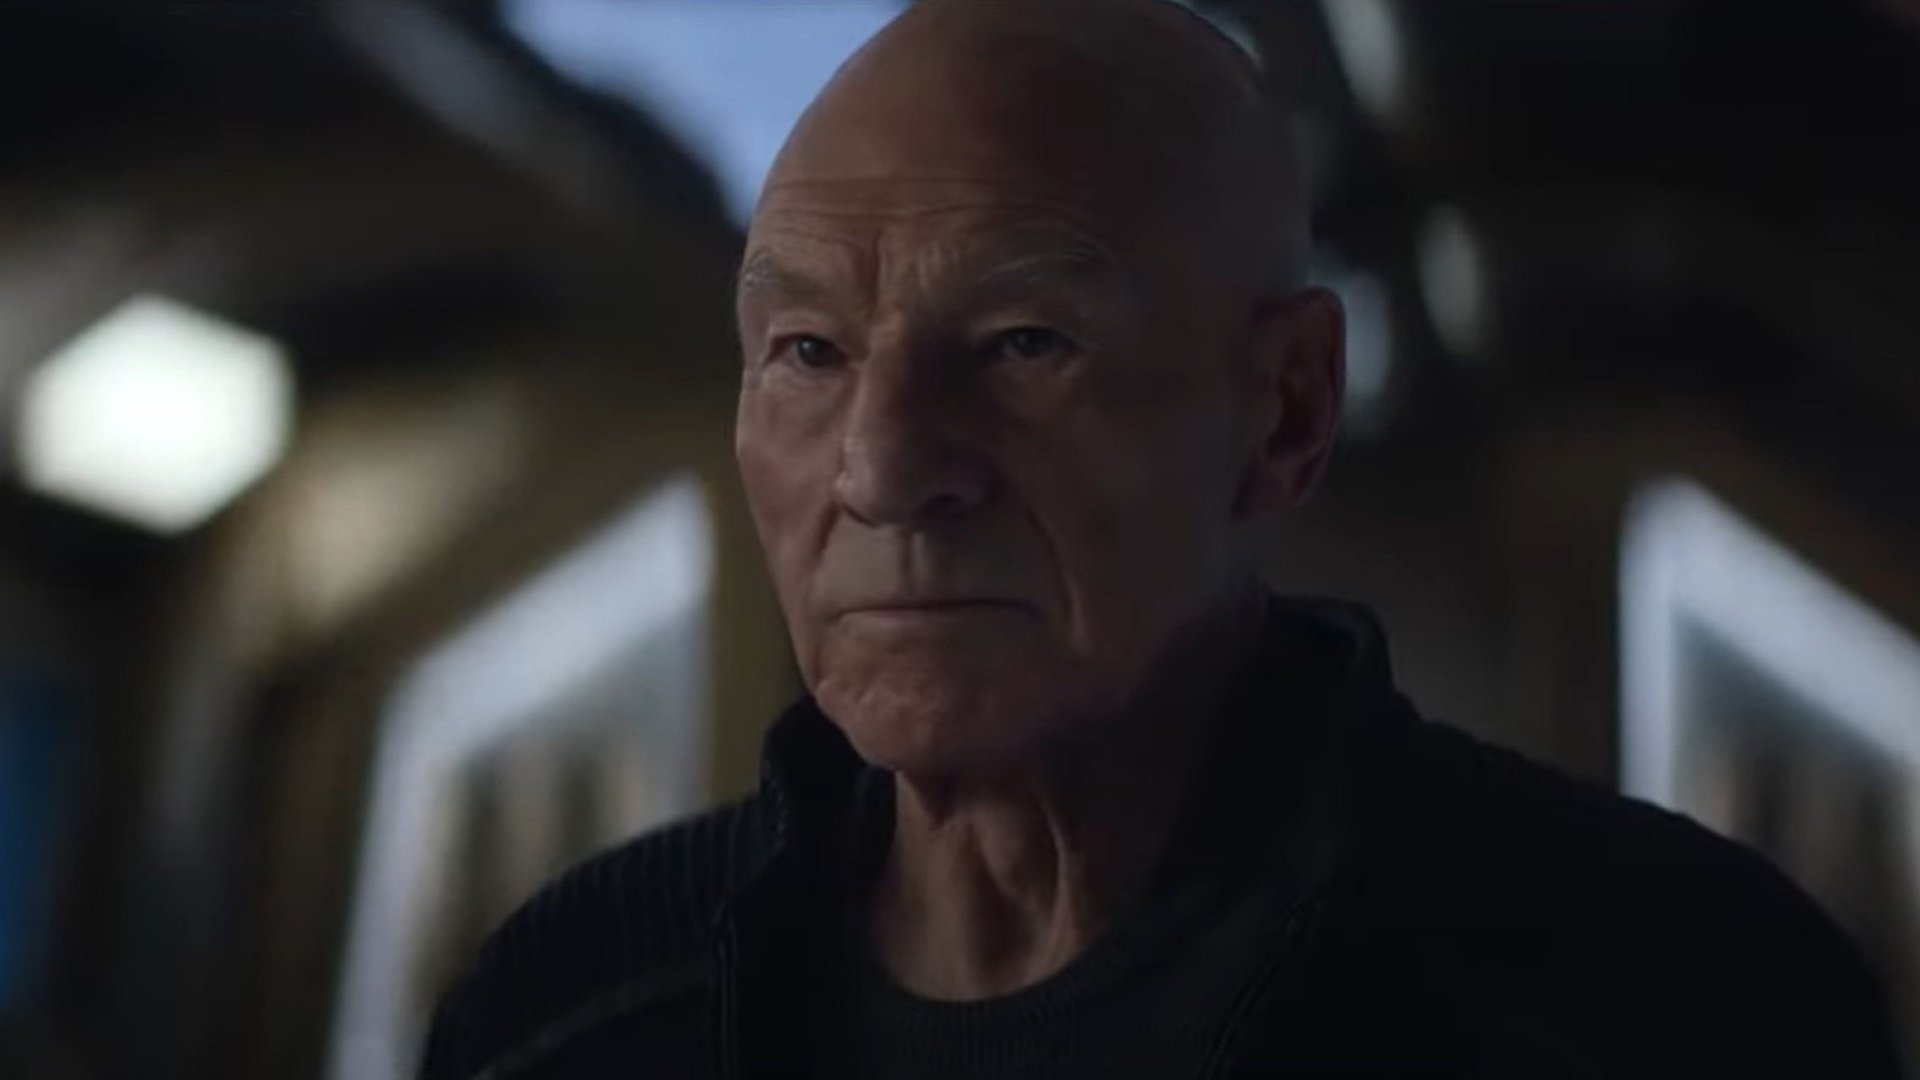 Star Trek: Picard Finale Season Teaser Trailer Features TNG Nostalgia